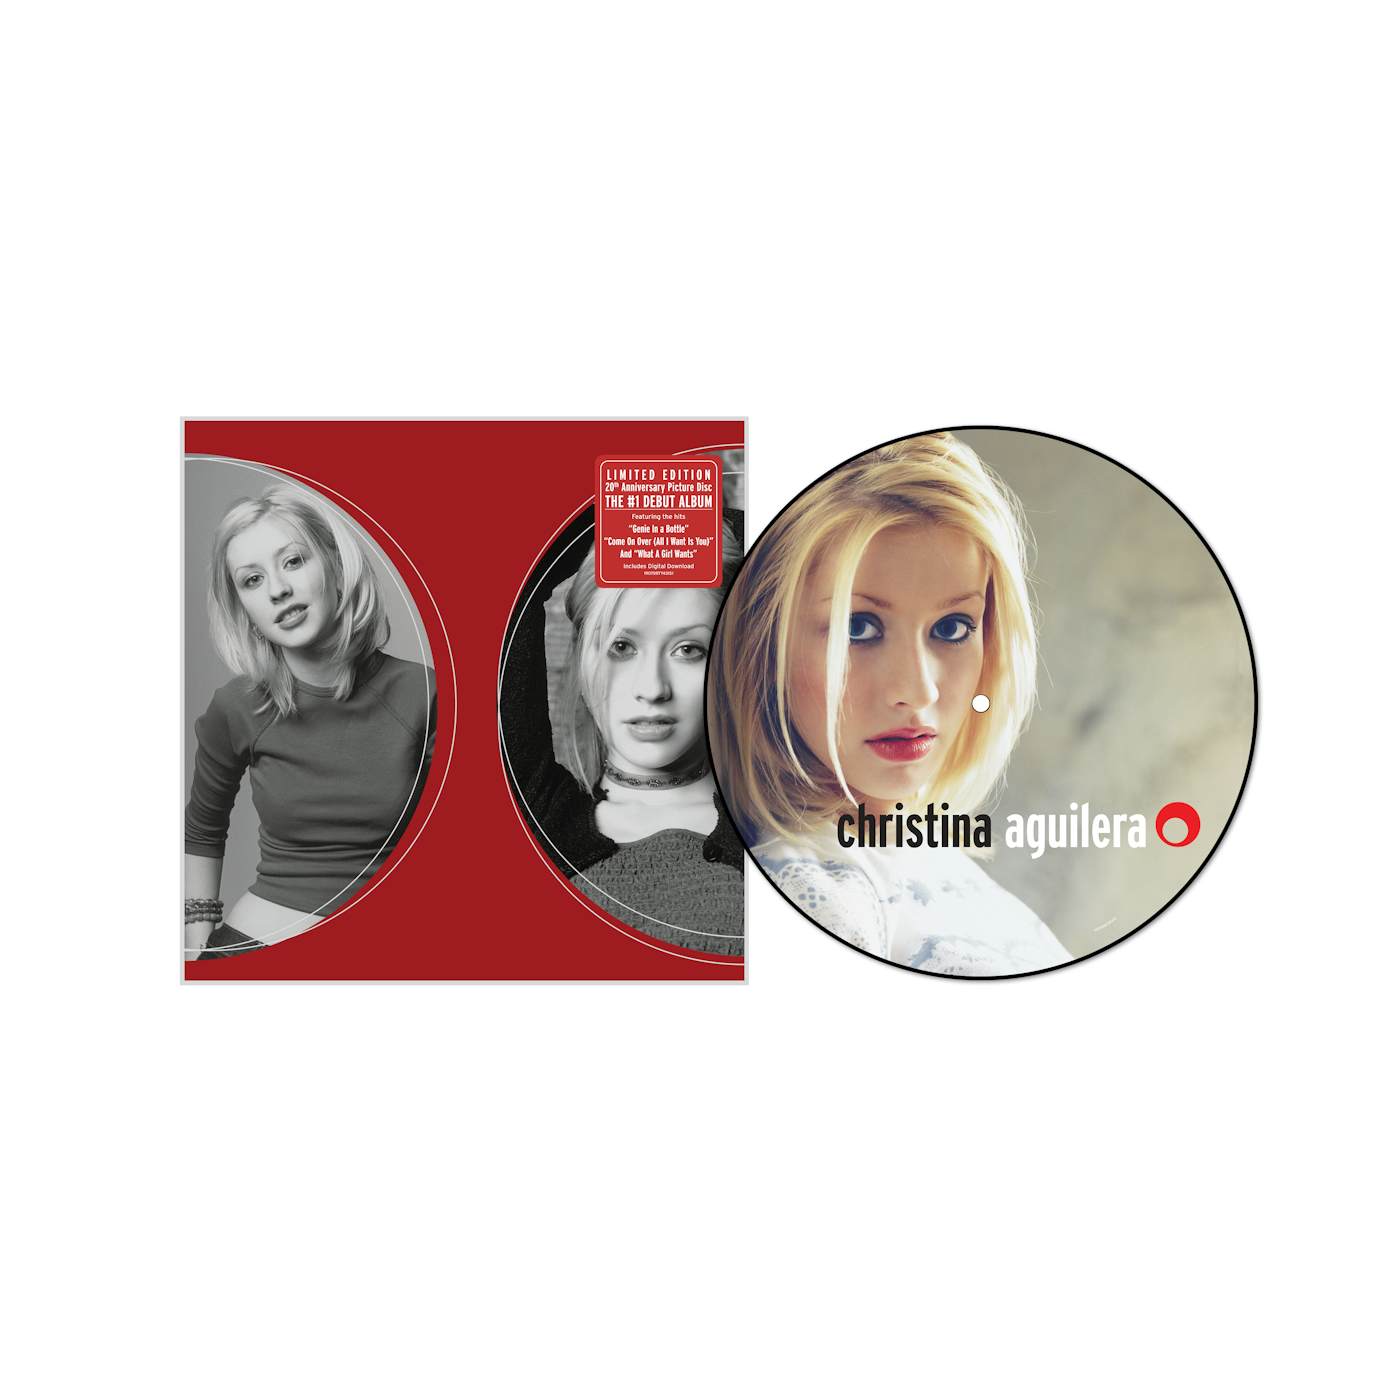 Christina Aguilera Vinyl Record